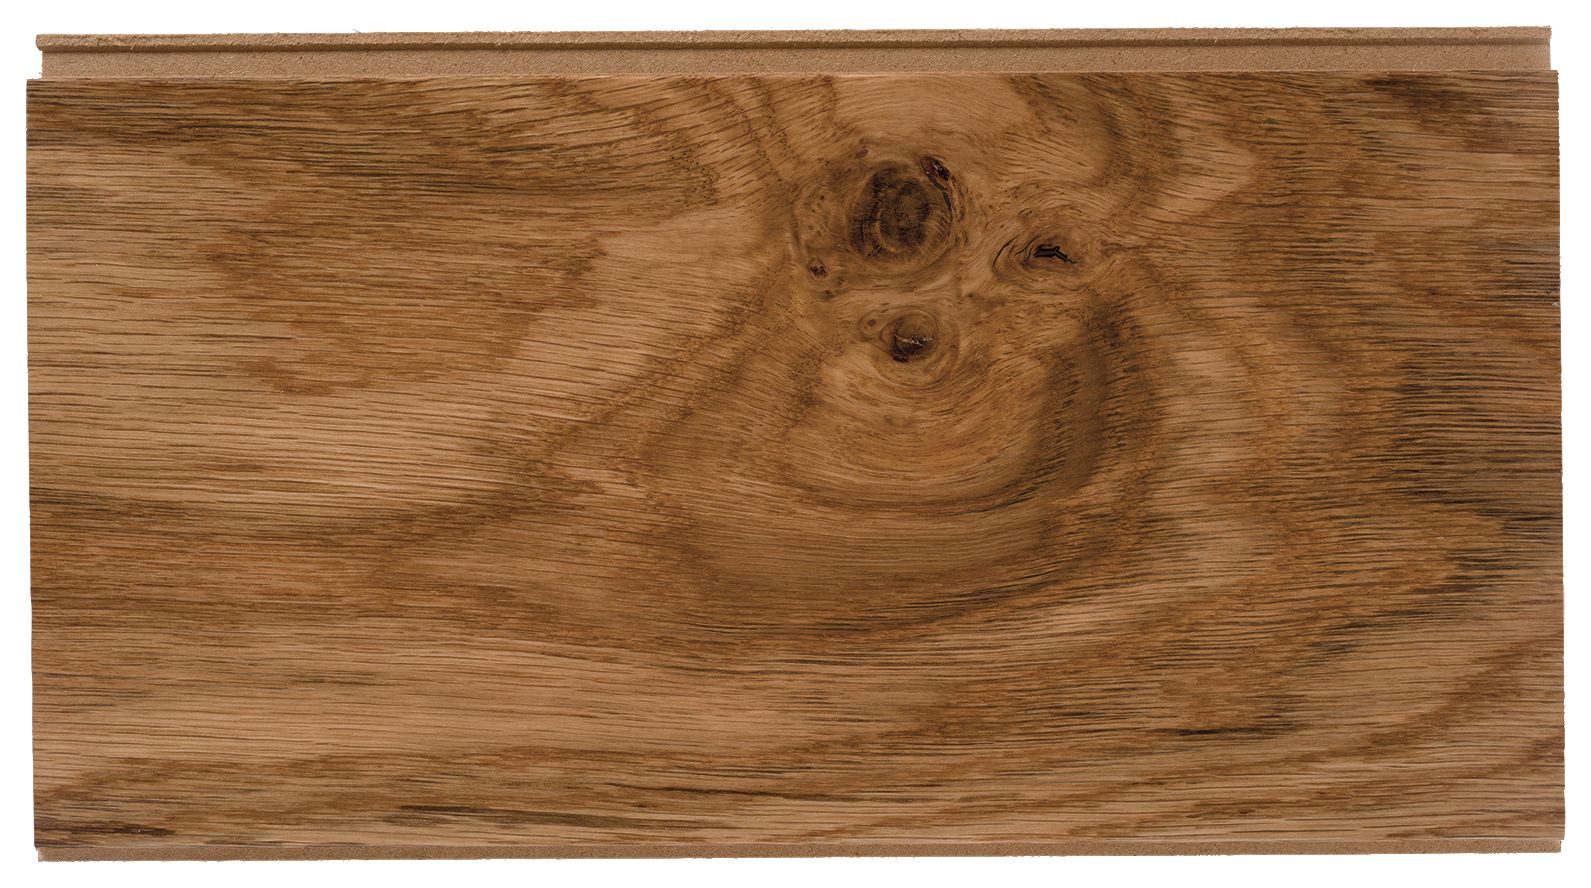 W by Woodpecker Nature Light Oak 10mm Engineered Wood Flooring - Sample